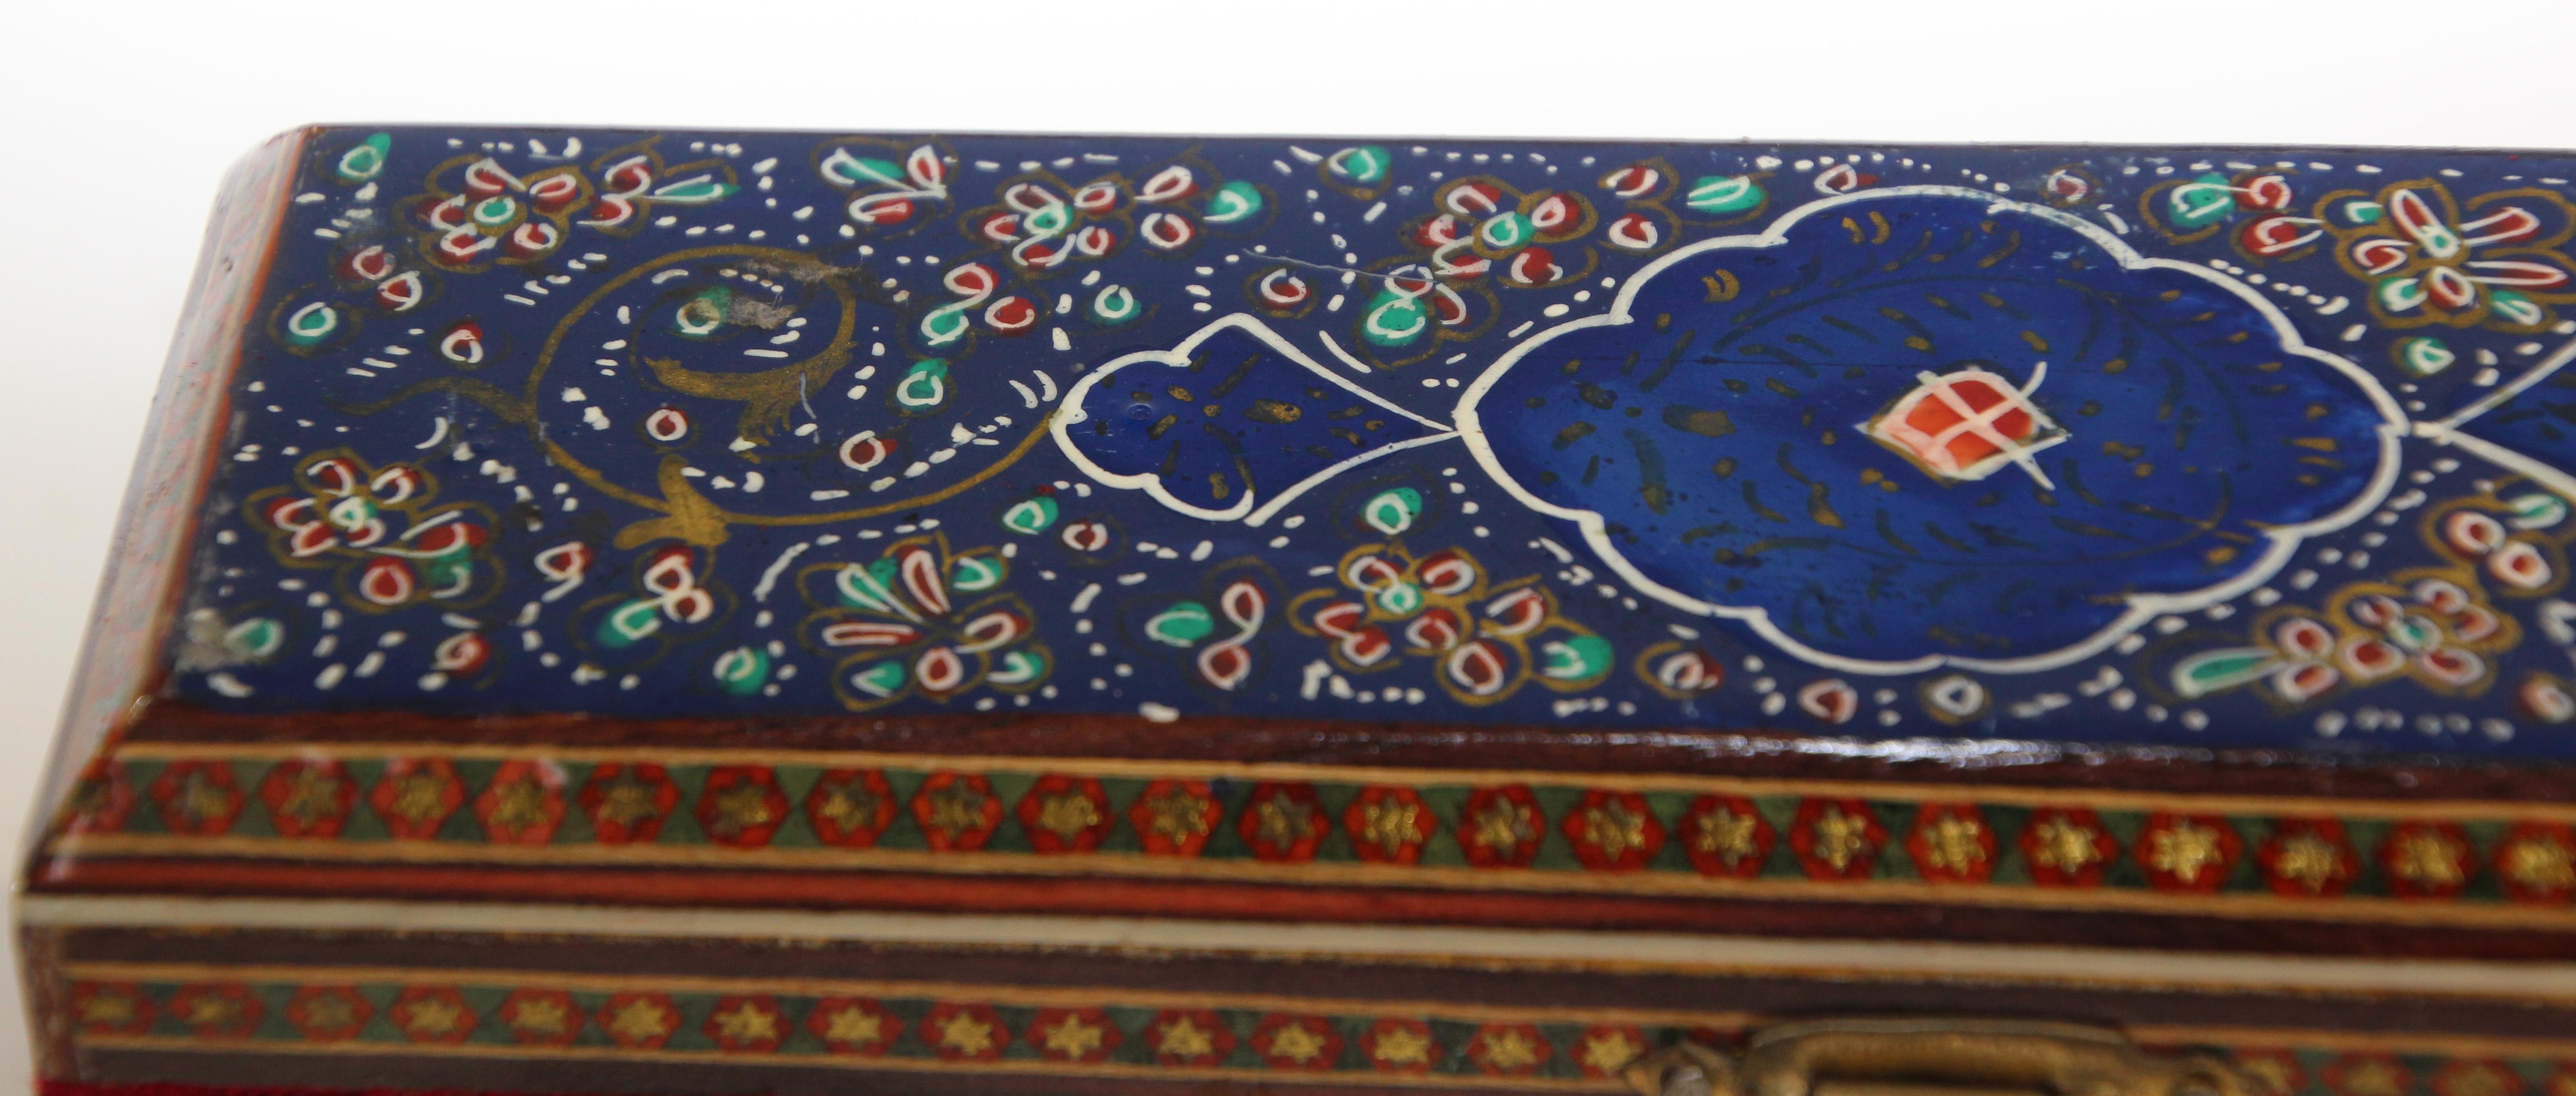 Wood 1950s Middle Eastern Moorish Inlaid Jewelry Trinket Mosaic Box